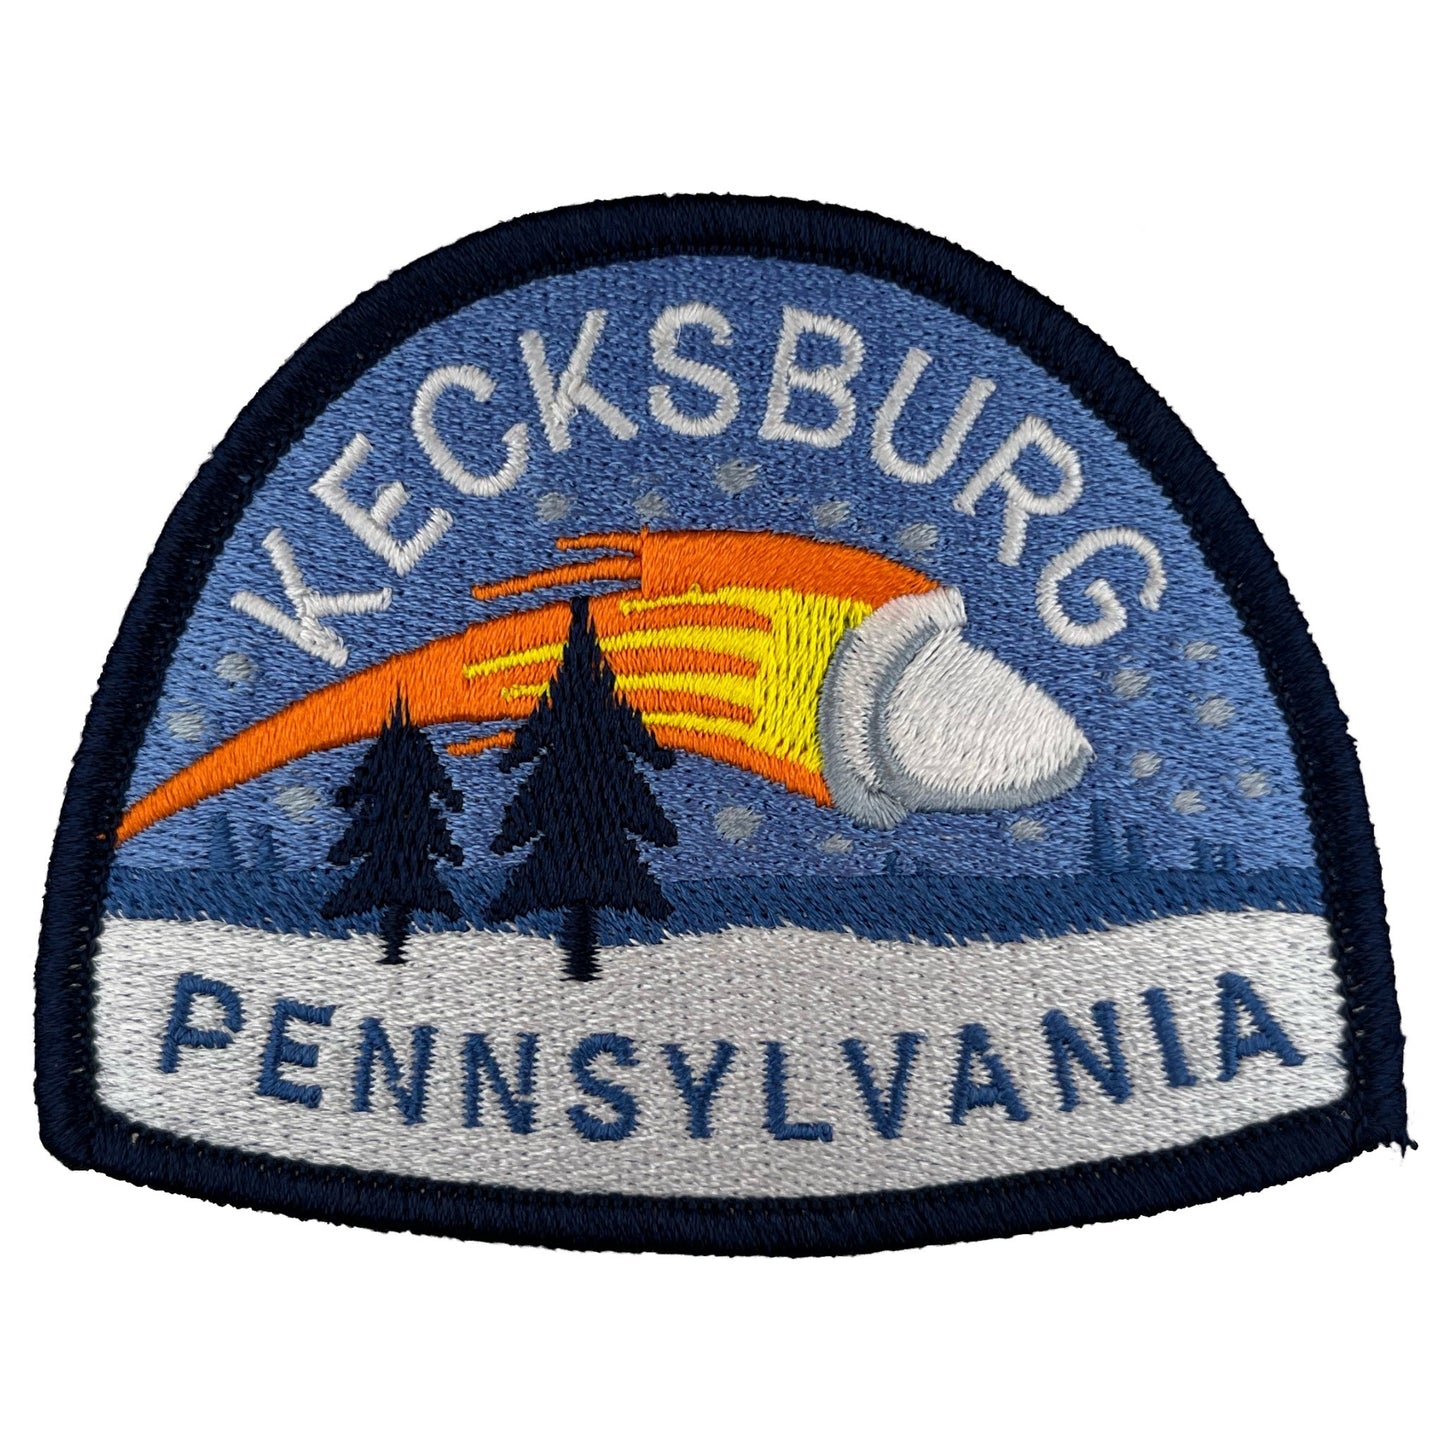 Kecksburg, Pennsylvania Travel Patch